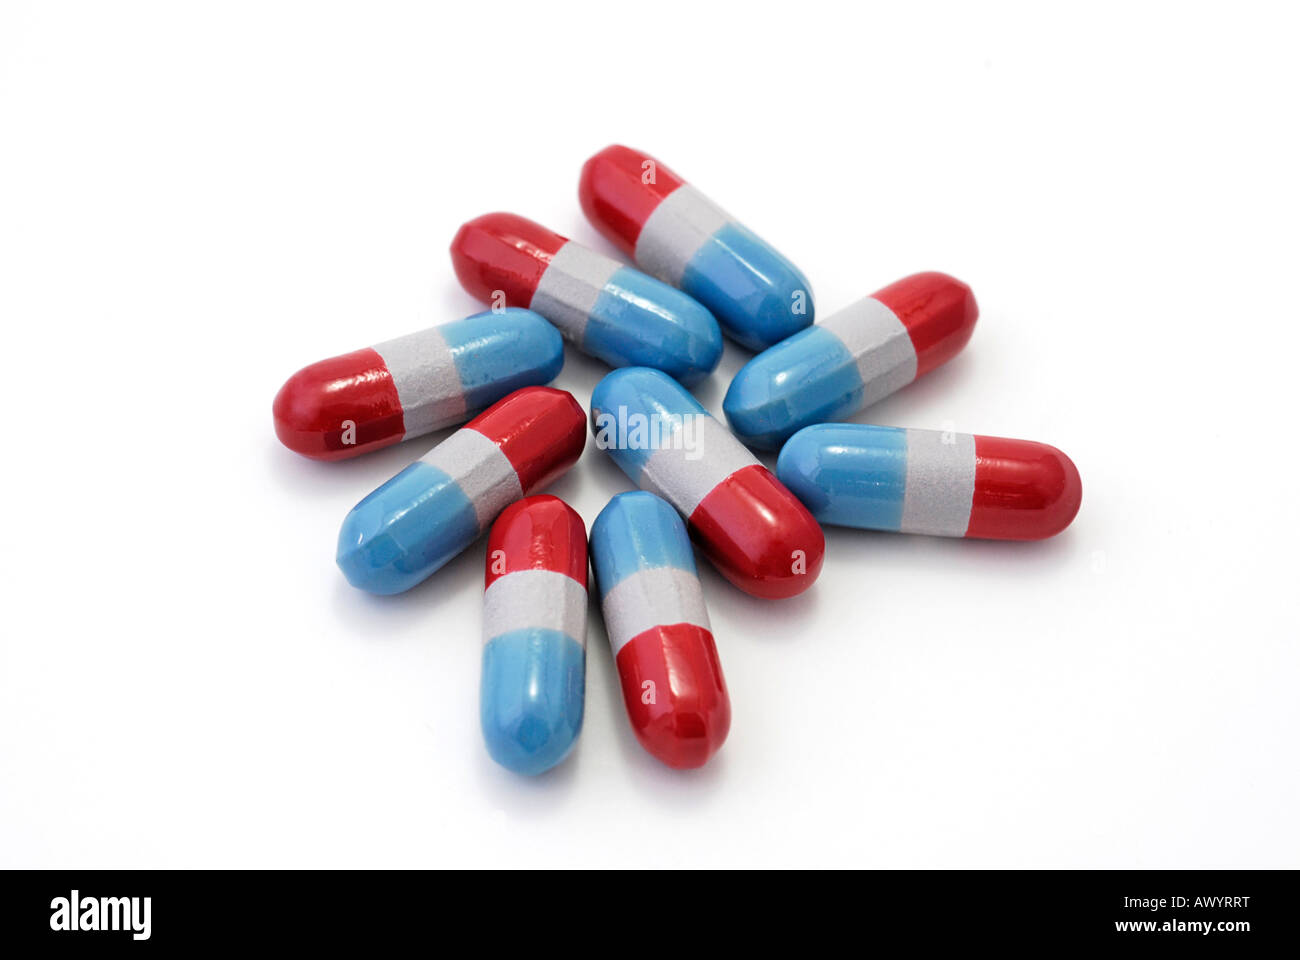 Tylenol pain relief capsules Stock Photo - Alamy